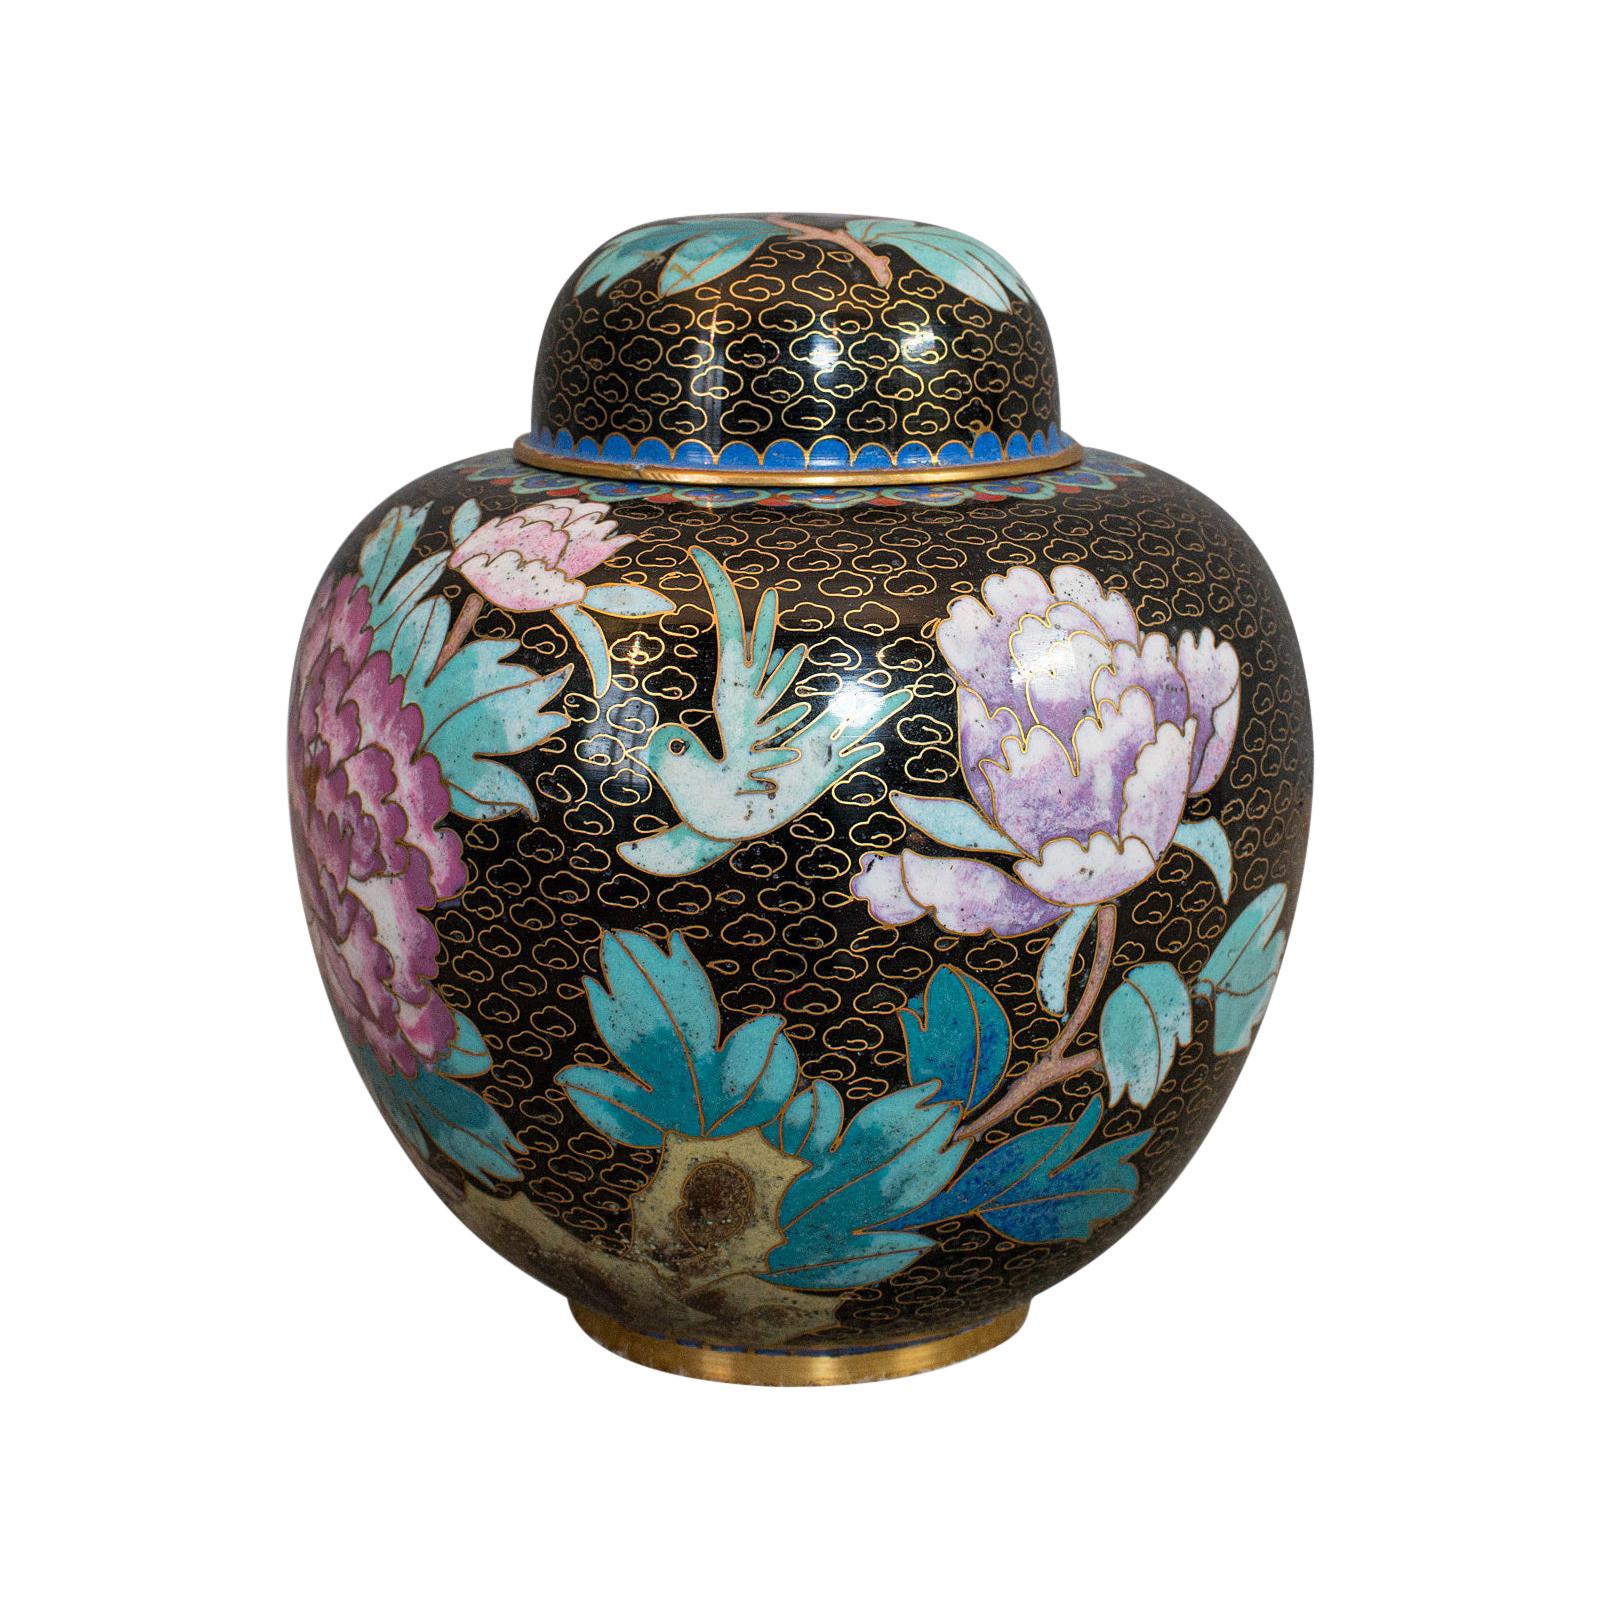 Antique Ginger Jar, Oriental, Cloisonné, Decorative, Spice Urn, Victorian, 1900